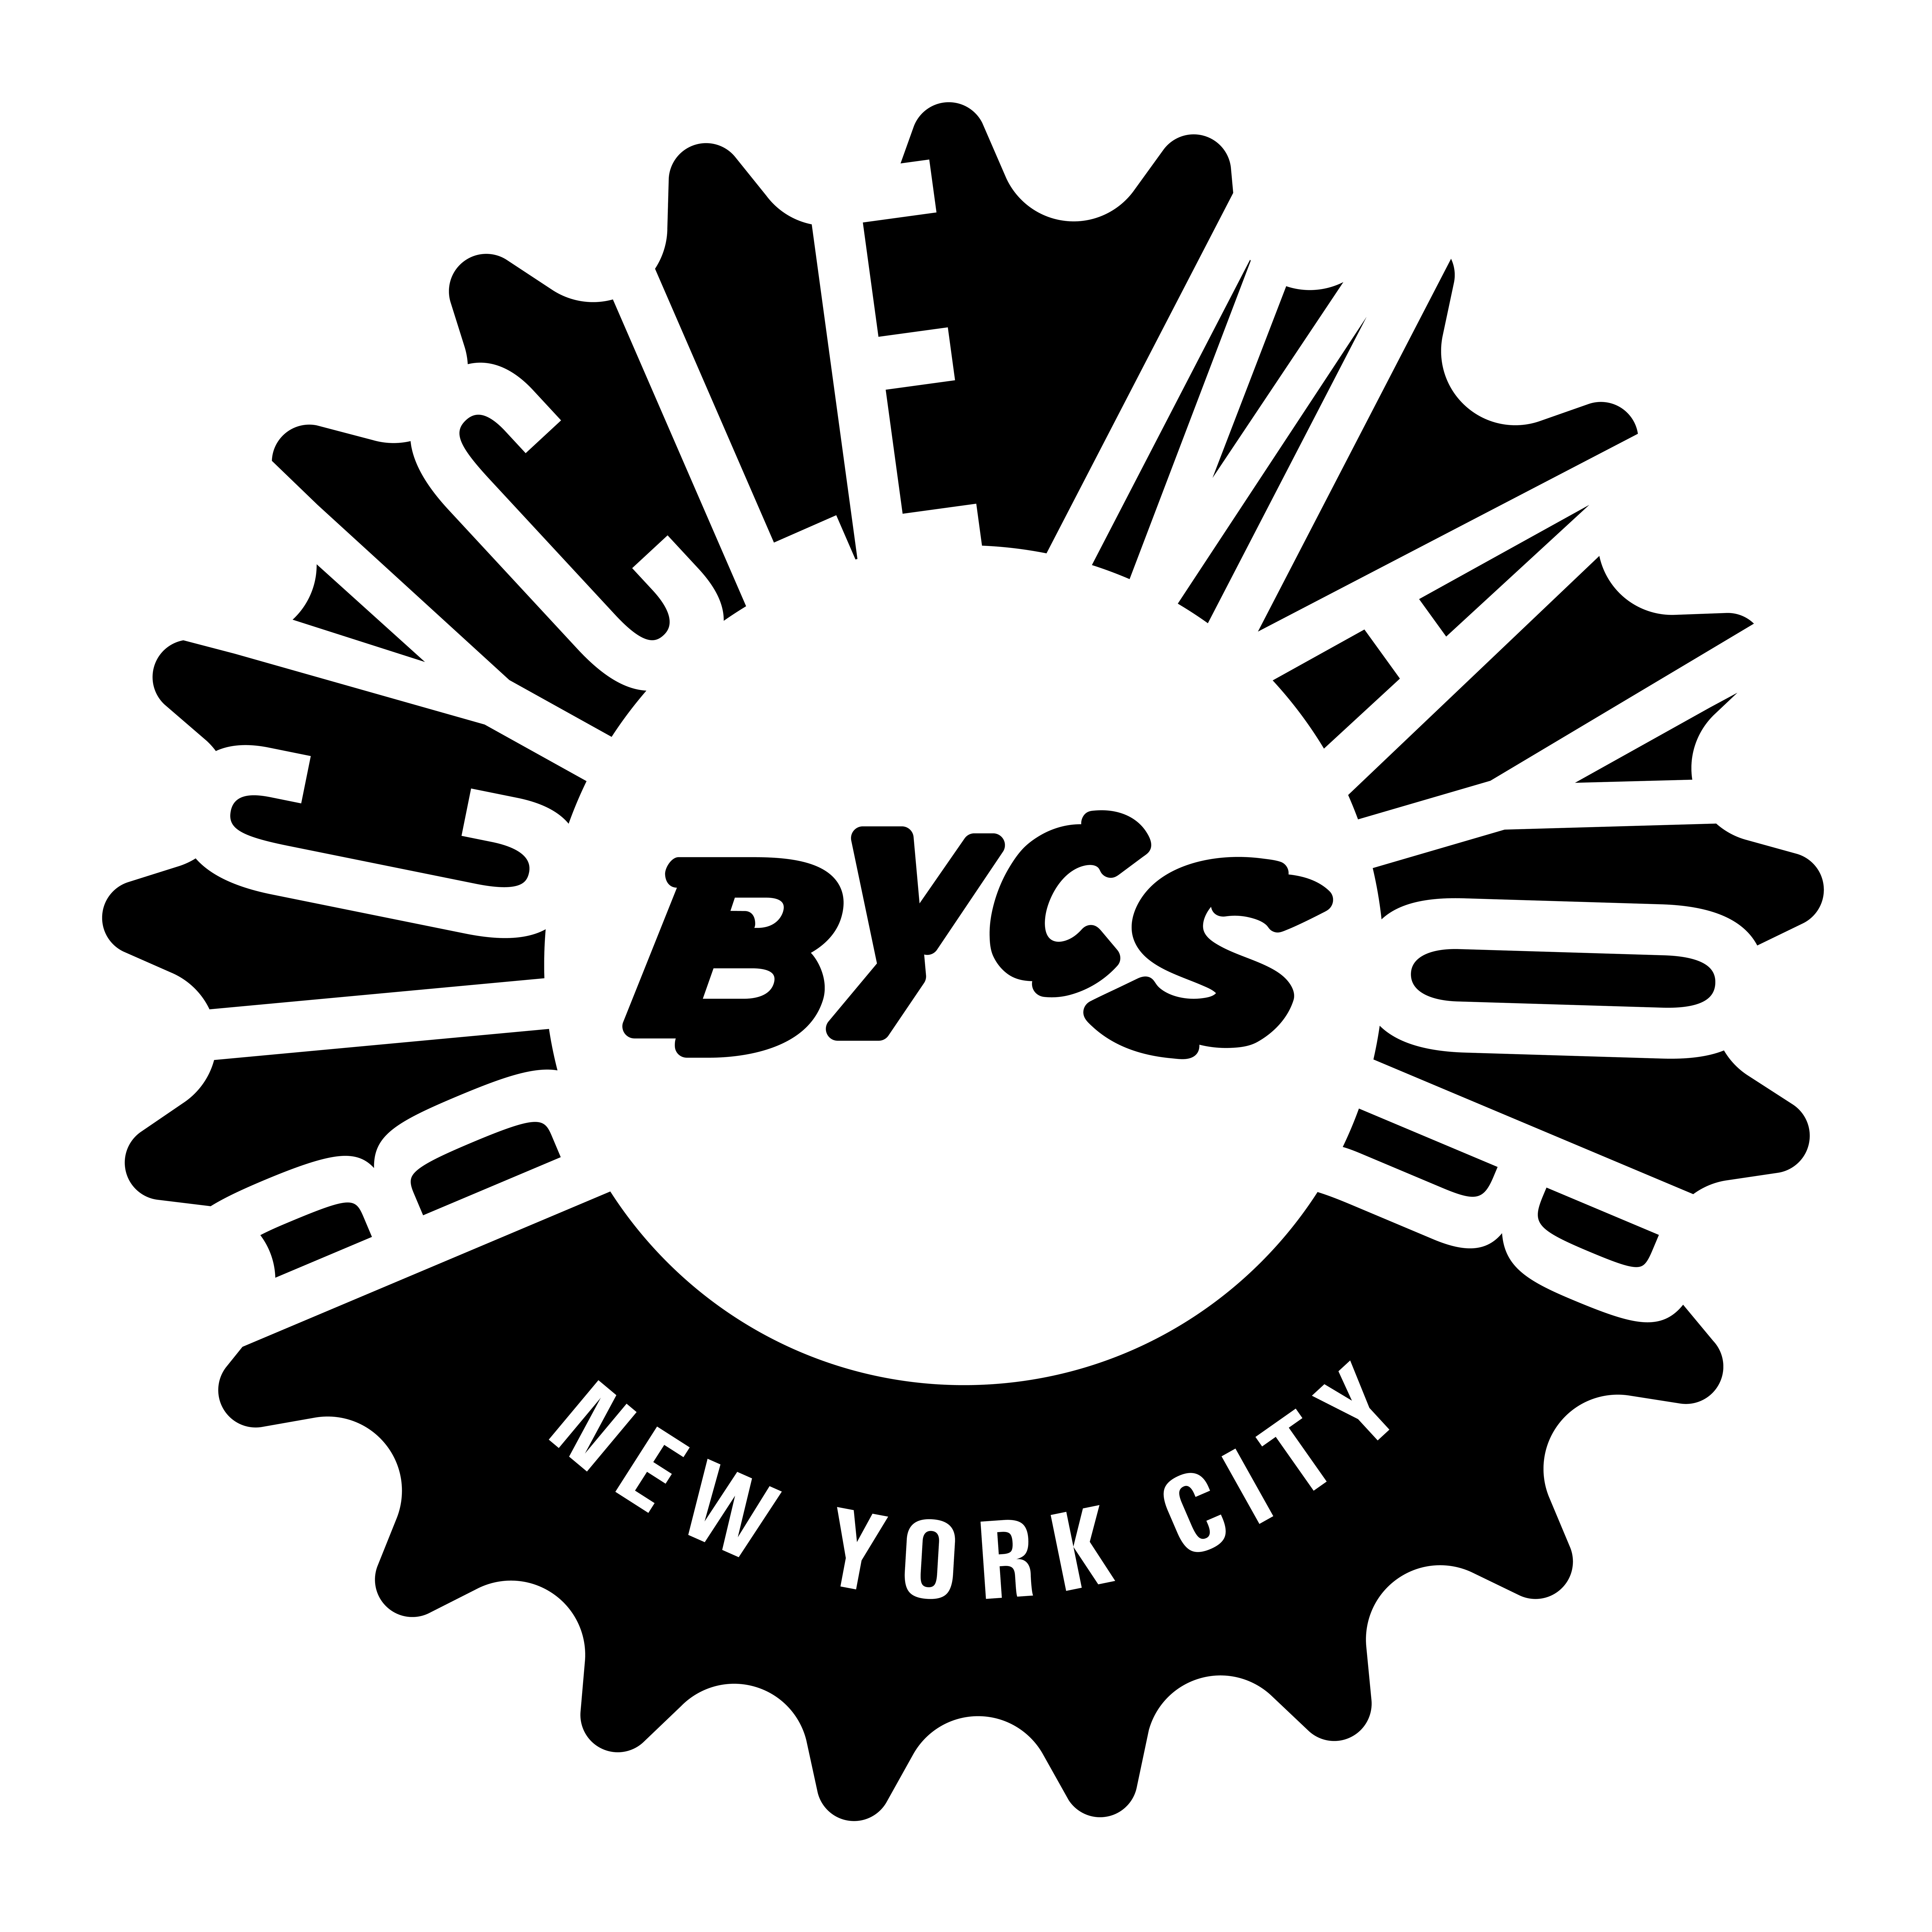 Courtney Williams, NYC People's Bike Mayor